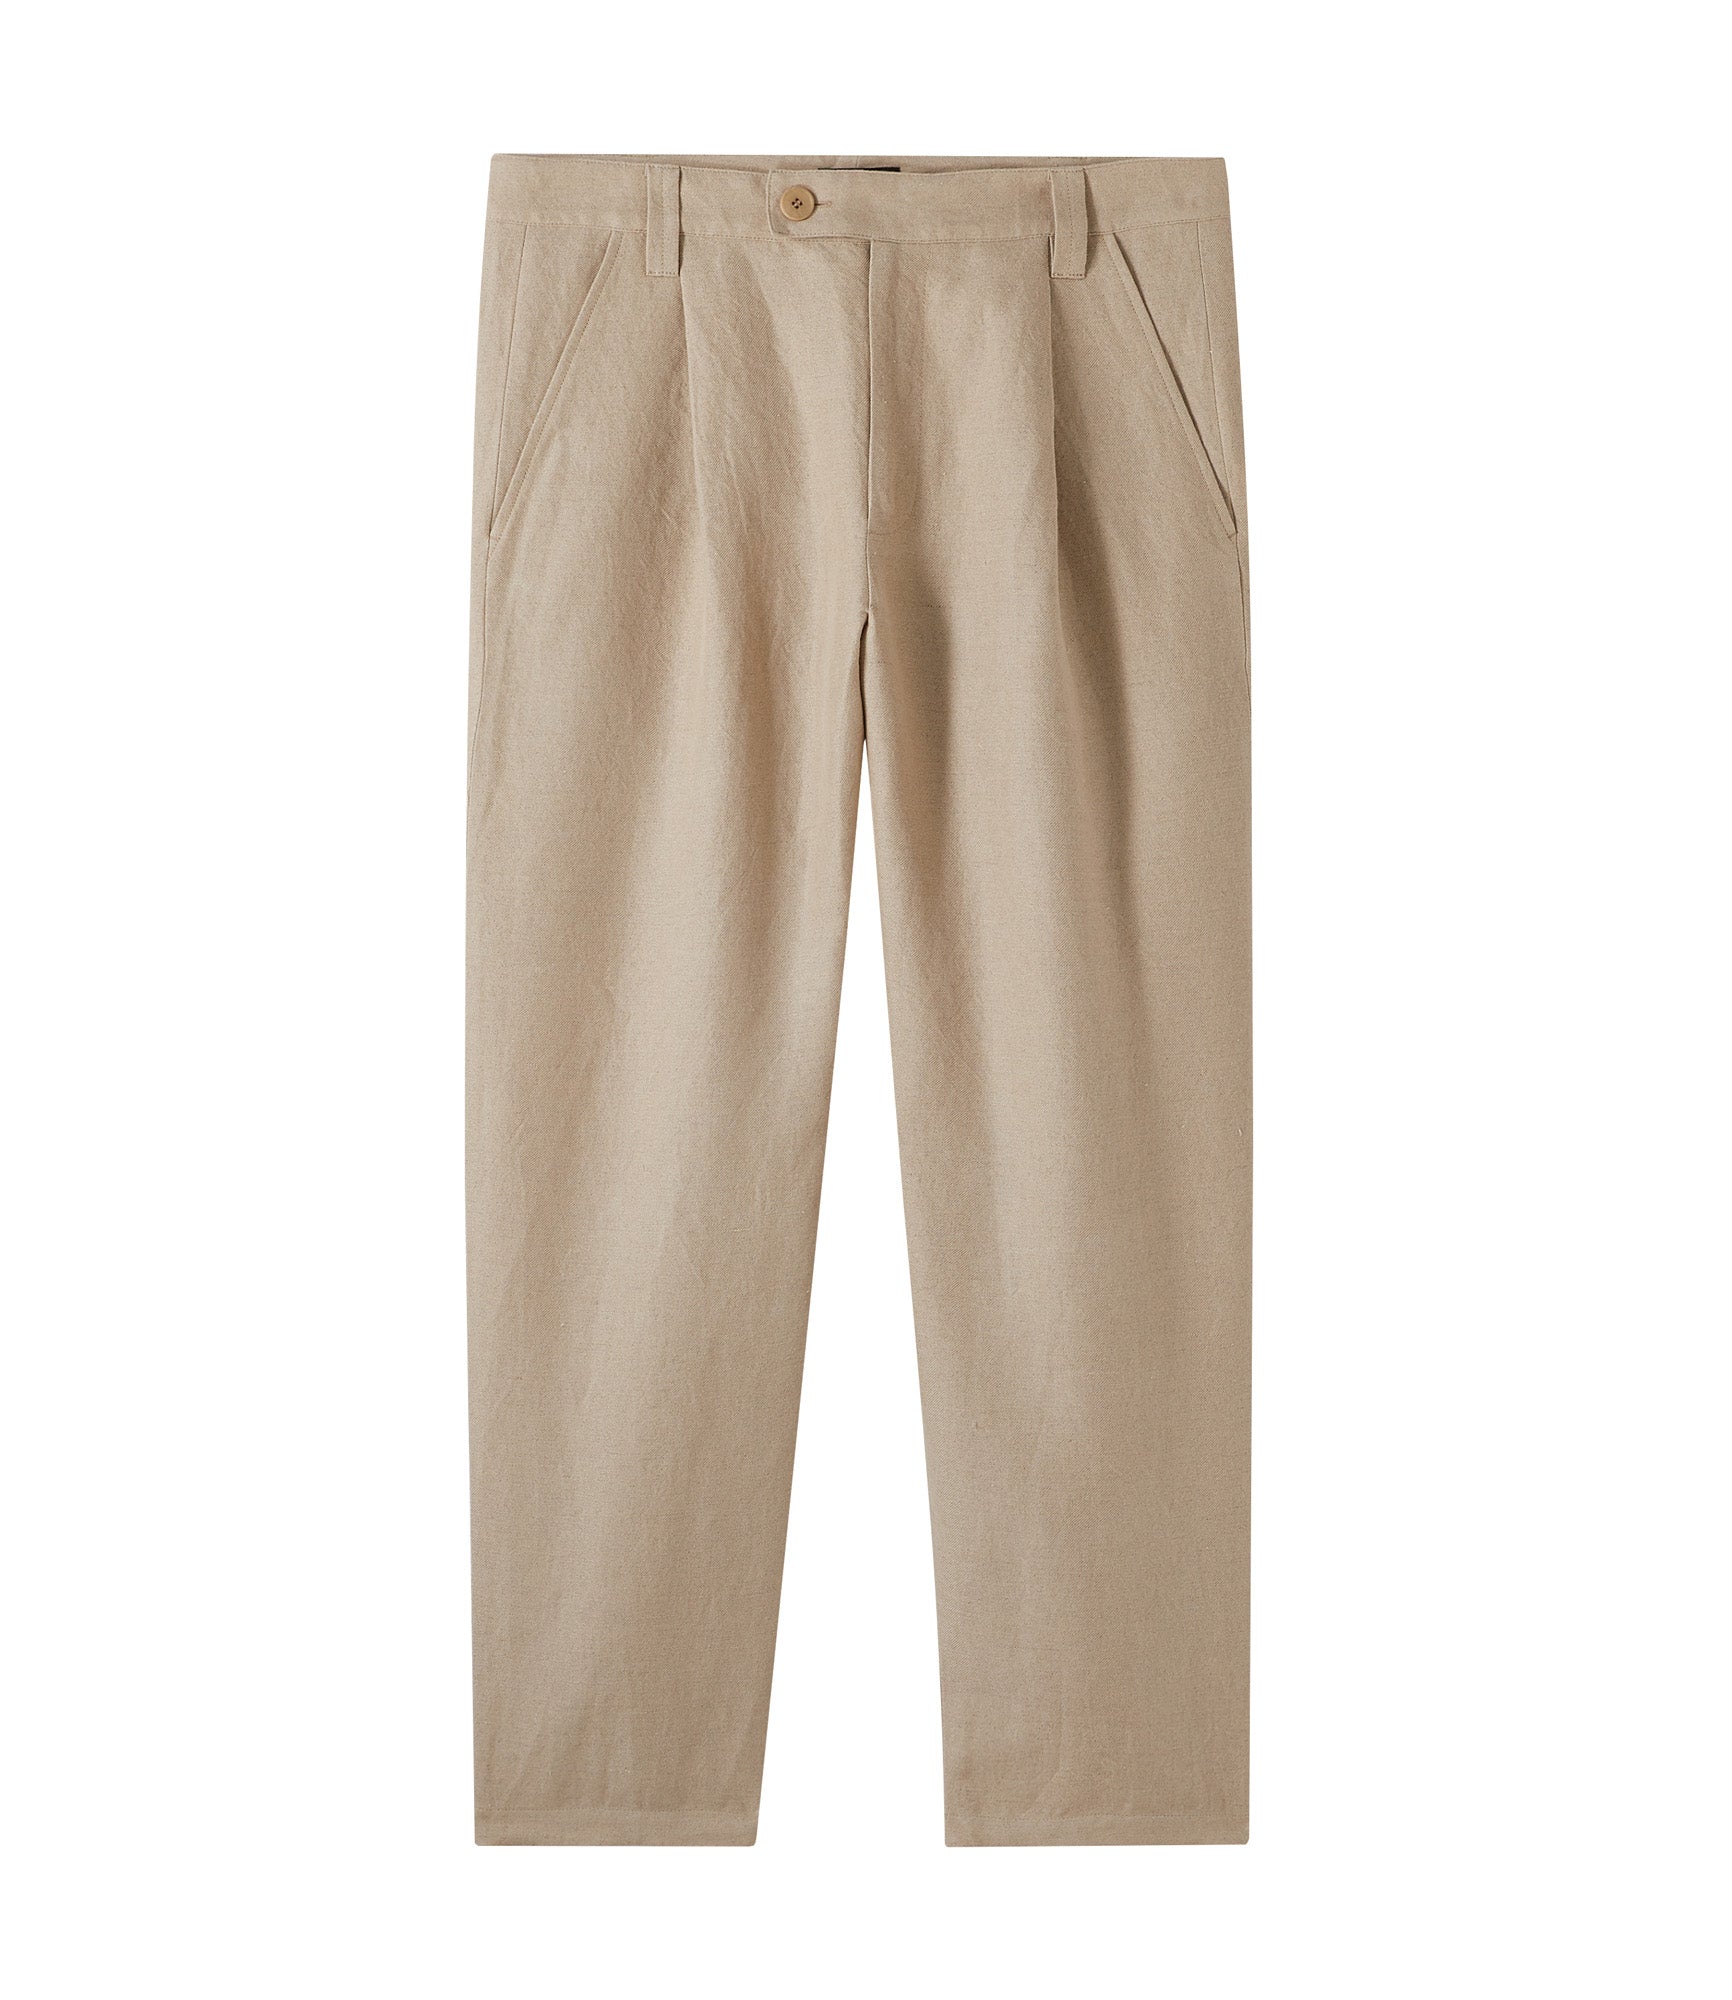 Renato pants  Straight-leg chino-style pants in a cotton-linen